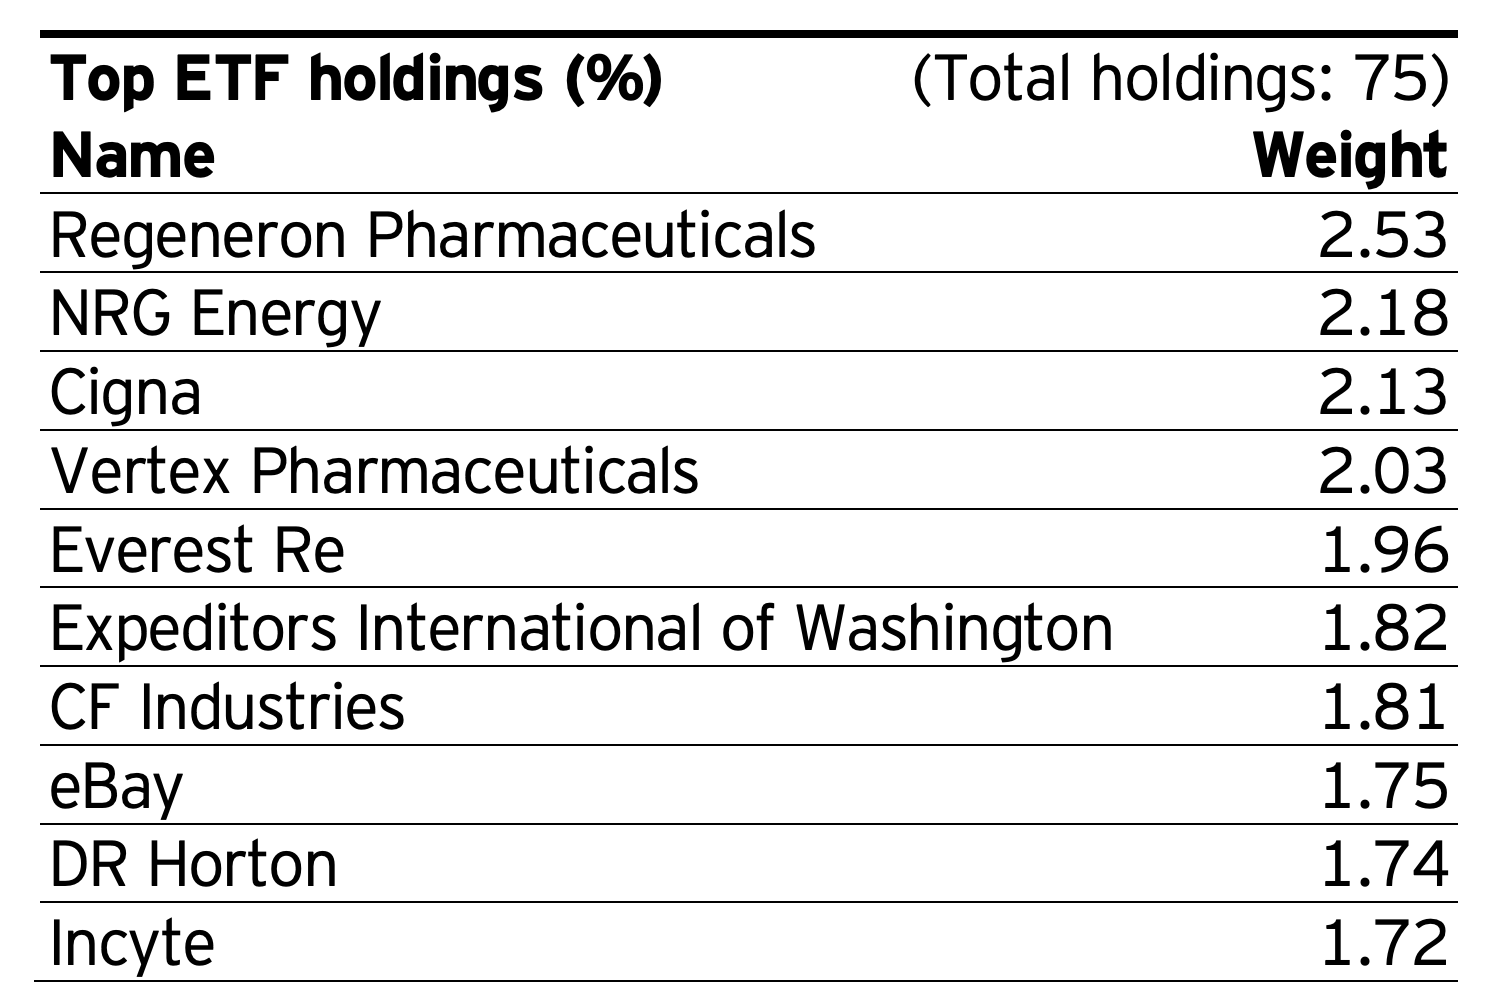 SPGP ETF Top 10 Holdings 